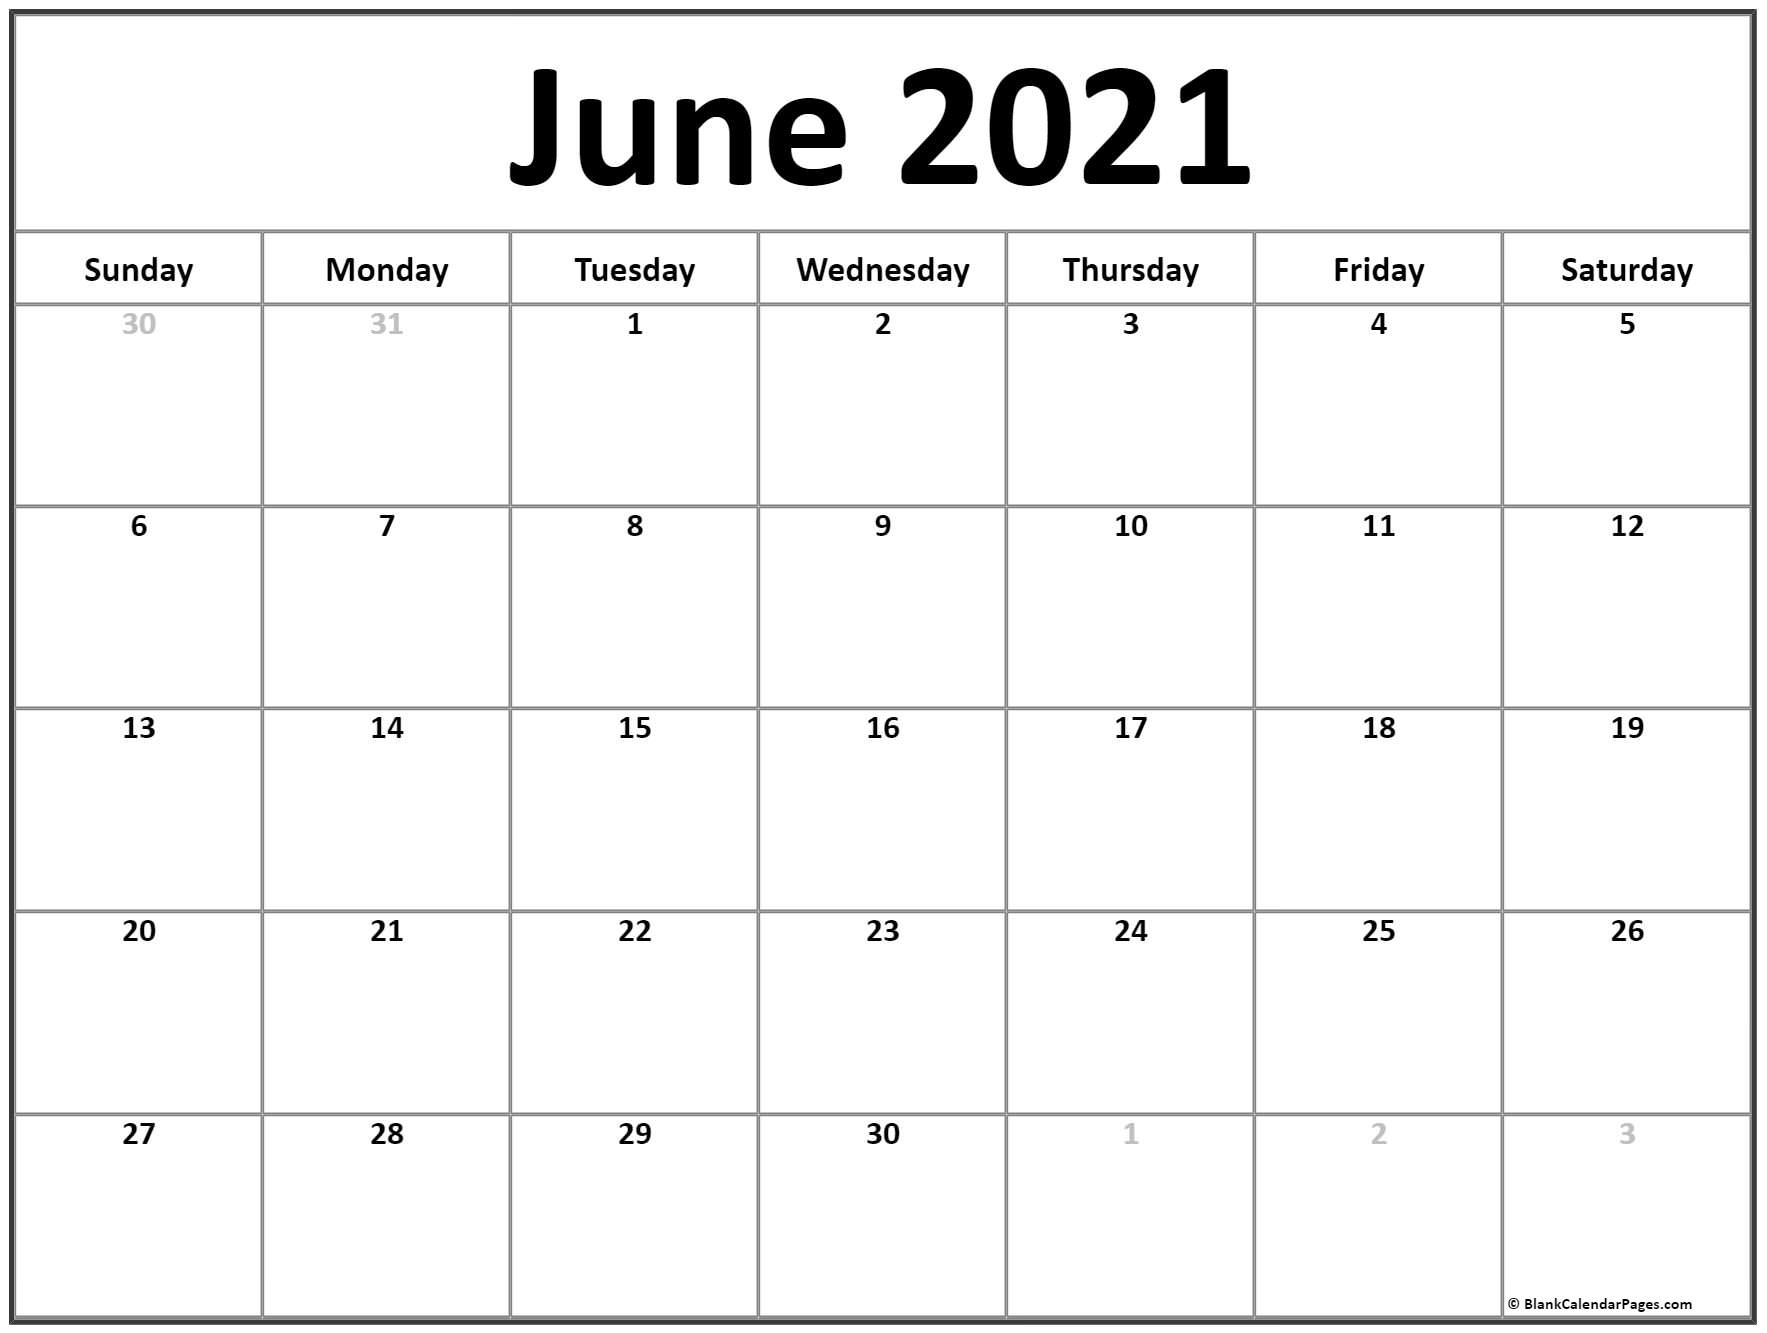 June 2021 Calendar | Free Printable Monthly Calendars June 2021 Printable Monthly Calendar With Lines